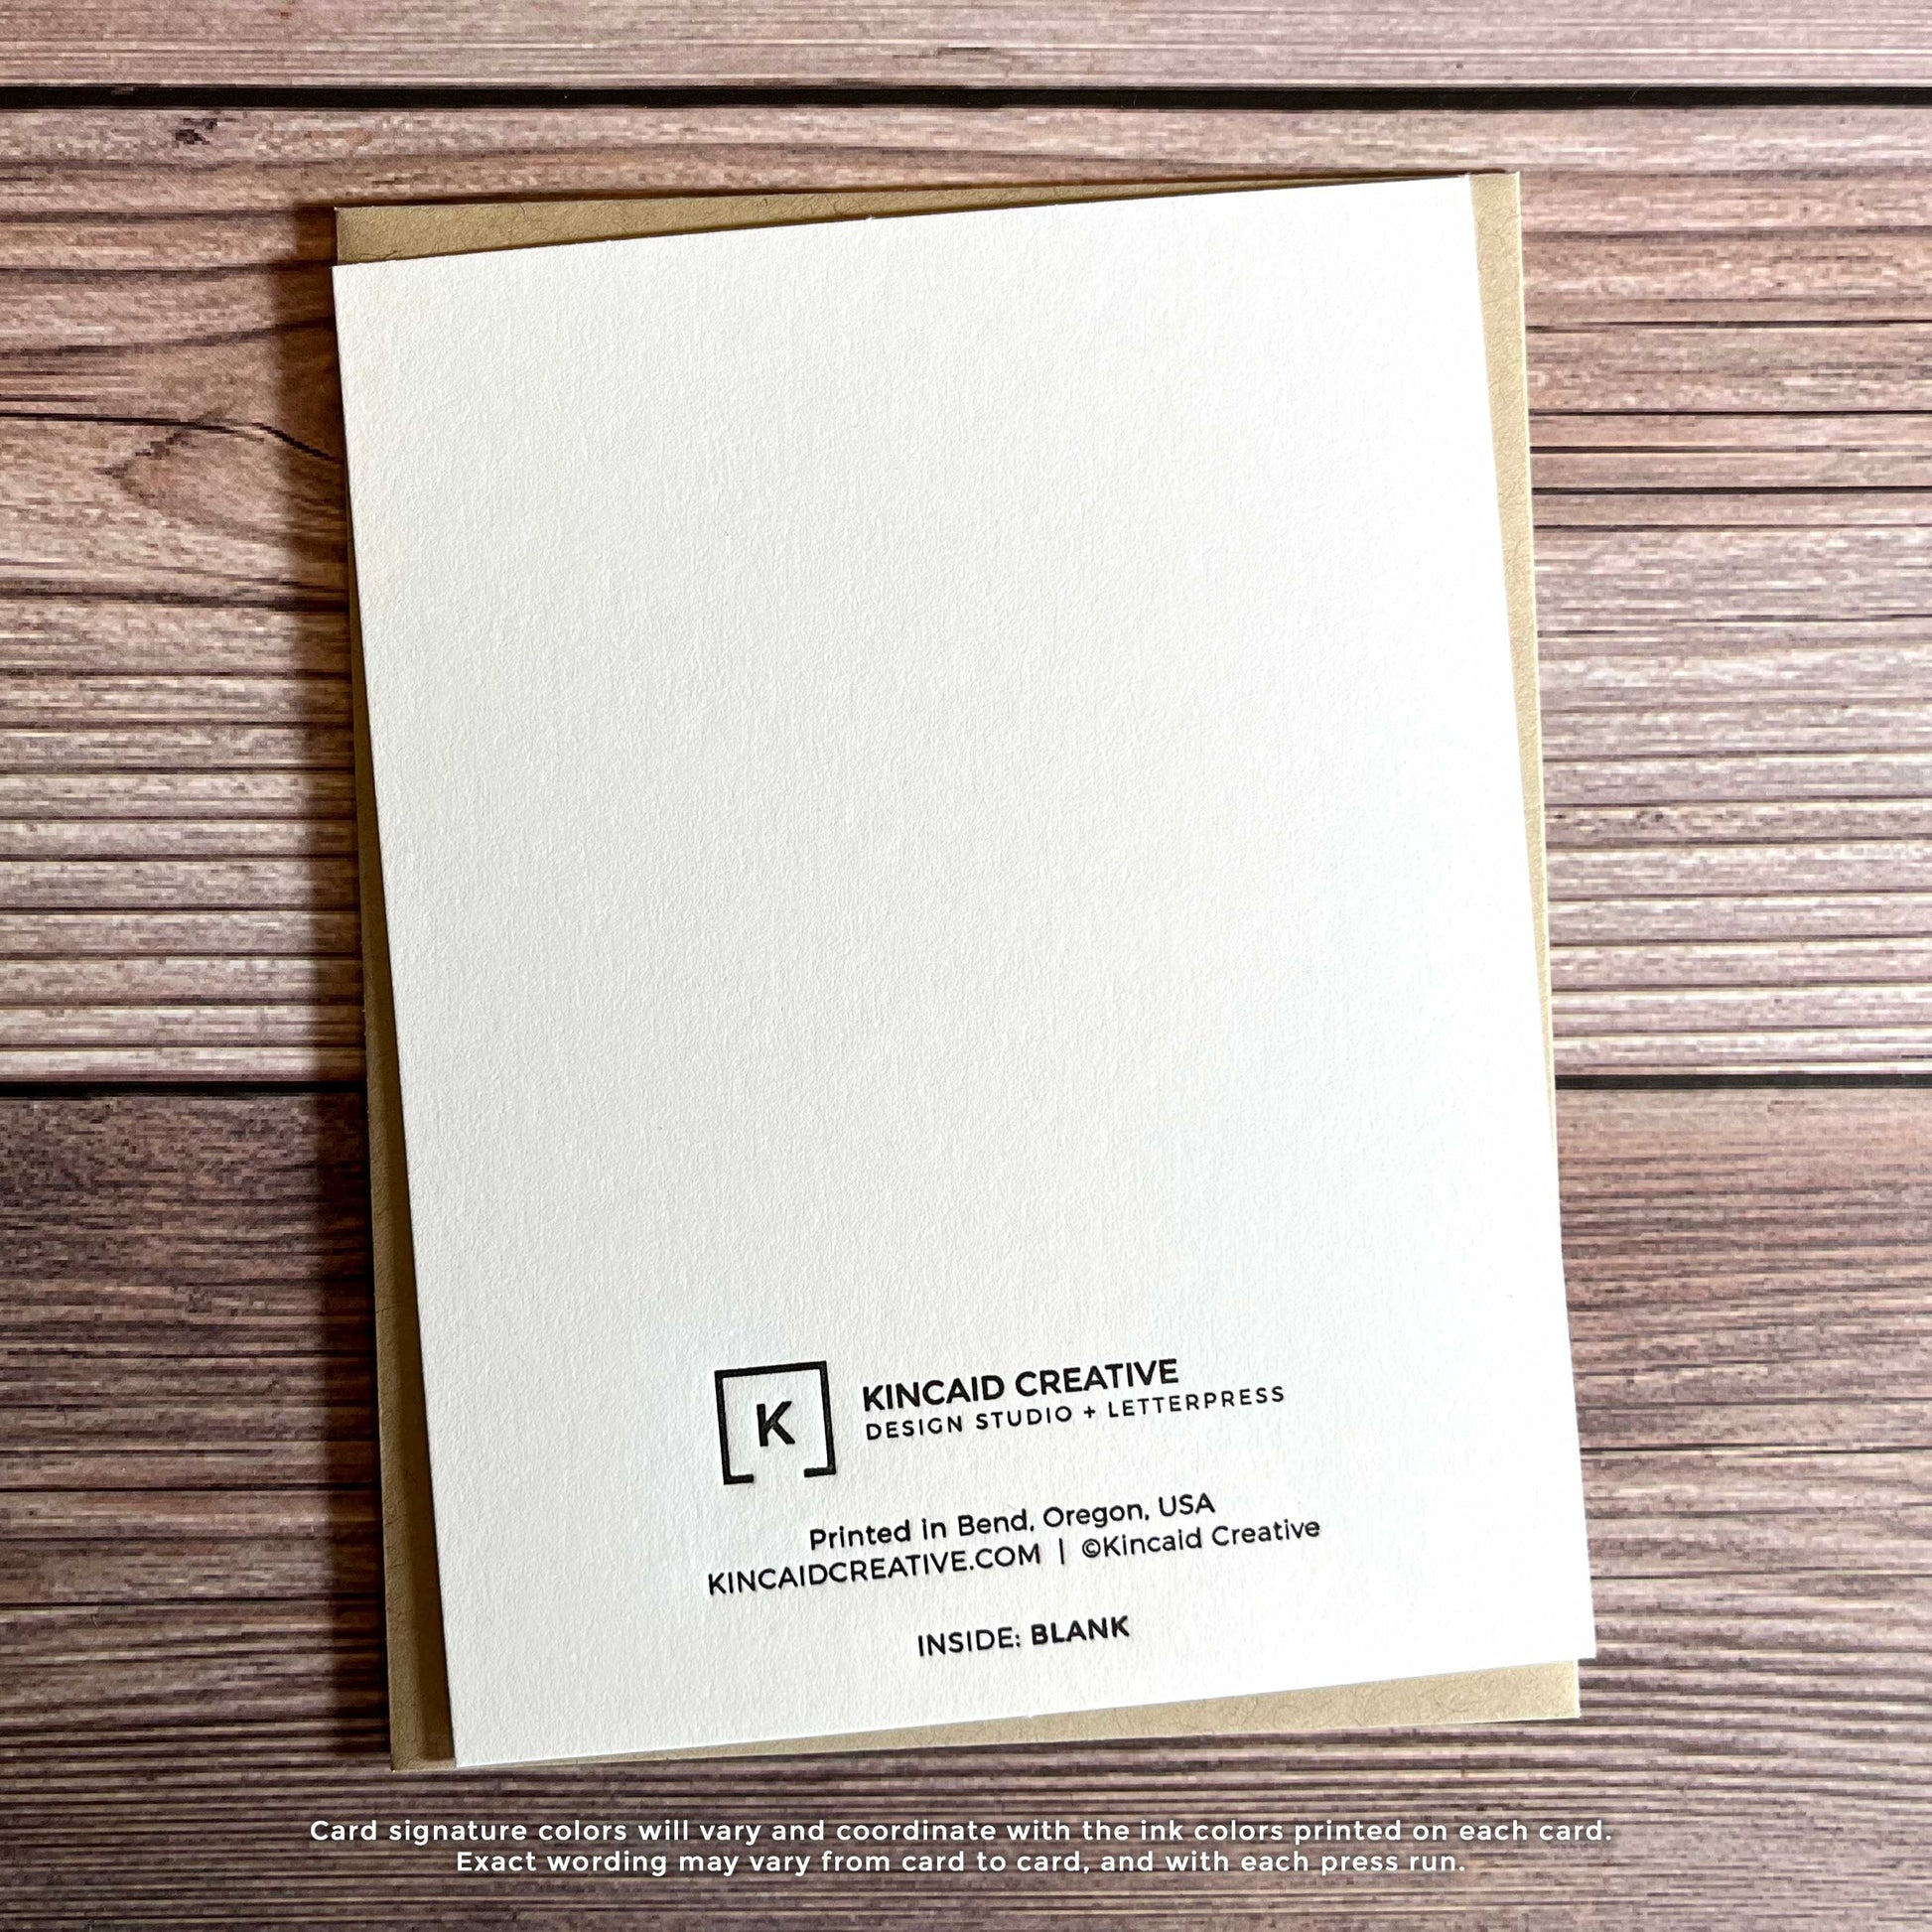 Letterpress congratulations and encouragement card, blank inside, back view of card, Kincaid Creative Design and Letterpress Studio, Bend, Oregon